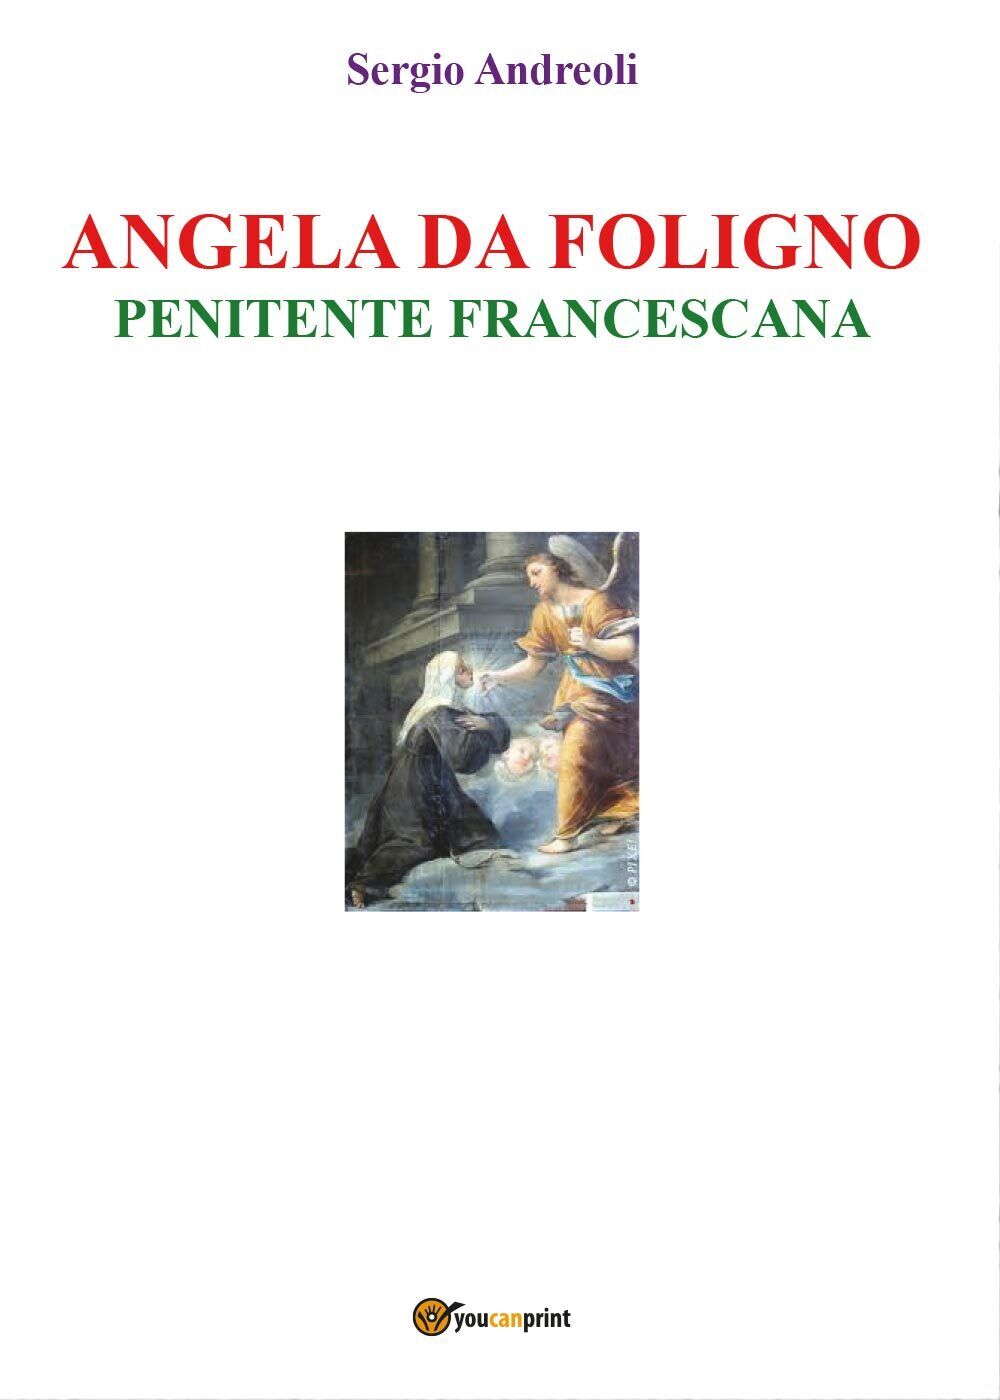 Angela da Foligno - Penitente francescana, Sergio Andreoli,  2019,  Youcanprint libro usato